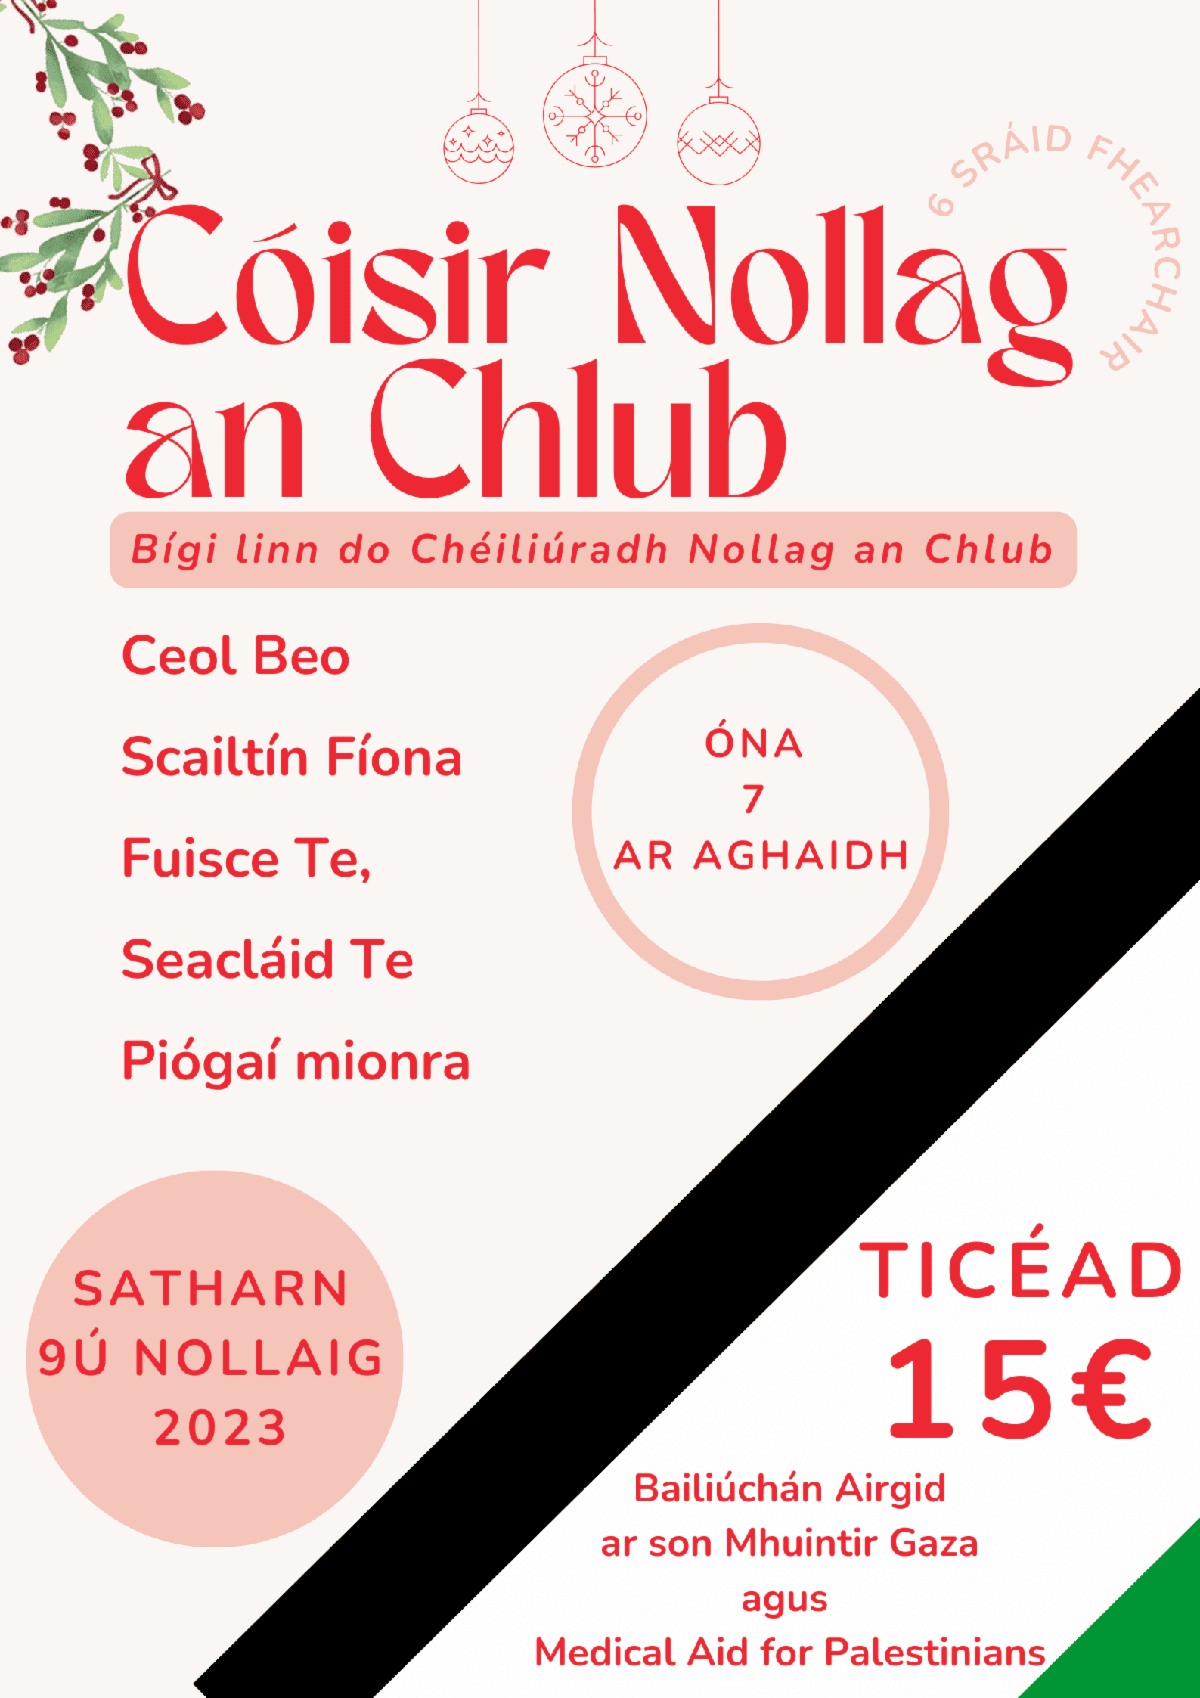 Cóisir Nollag an Chlub